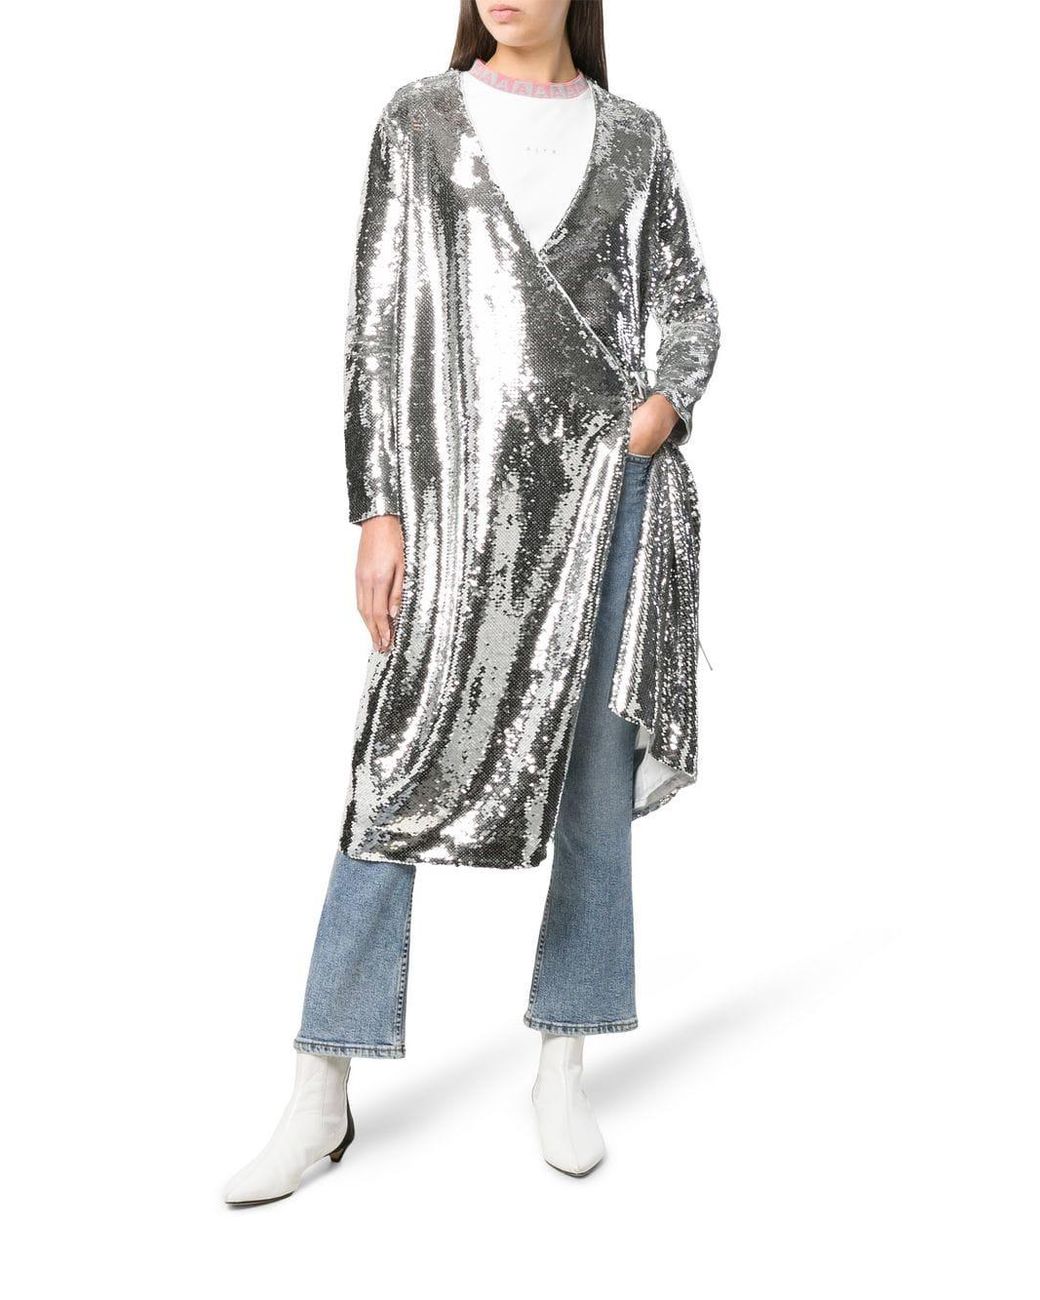 Ganni Sonora Sequin Wrap Dress in Metallic | Lyst